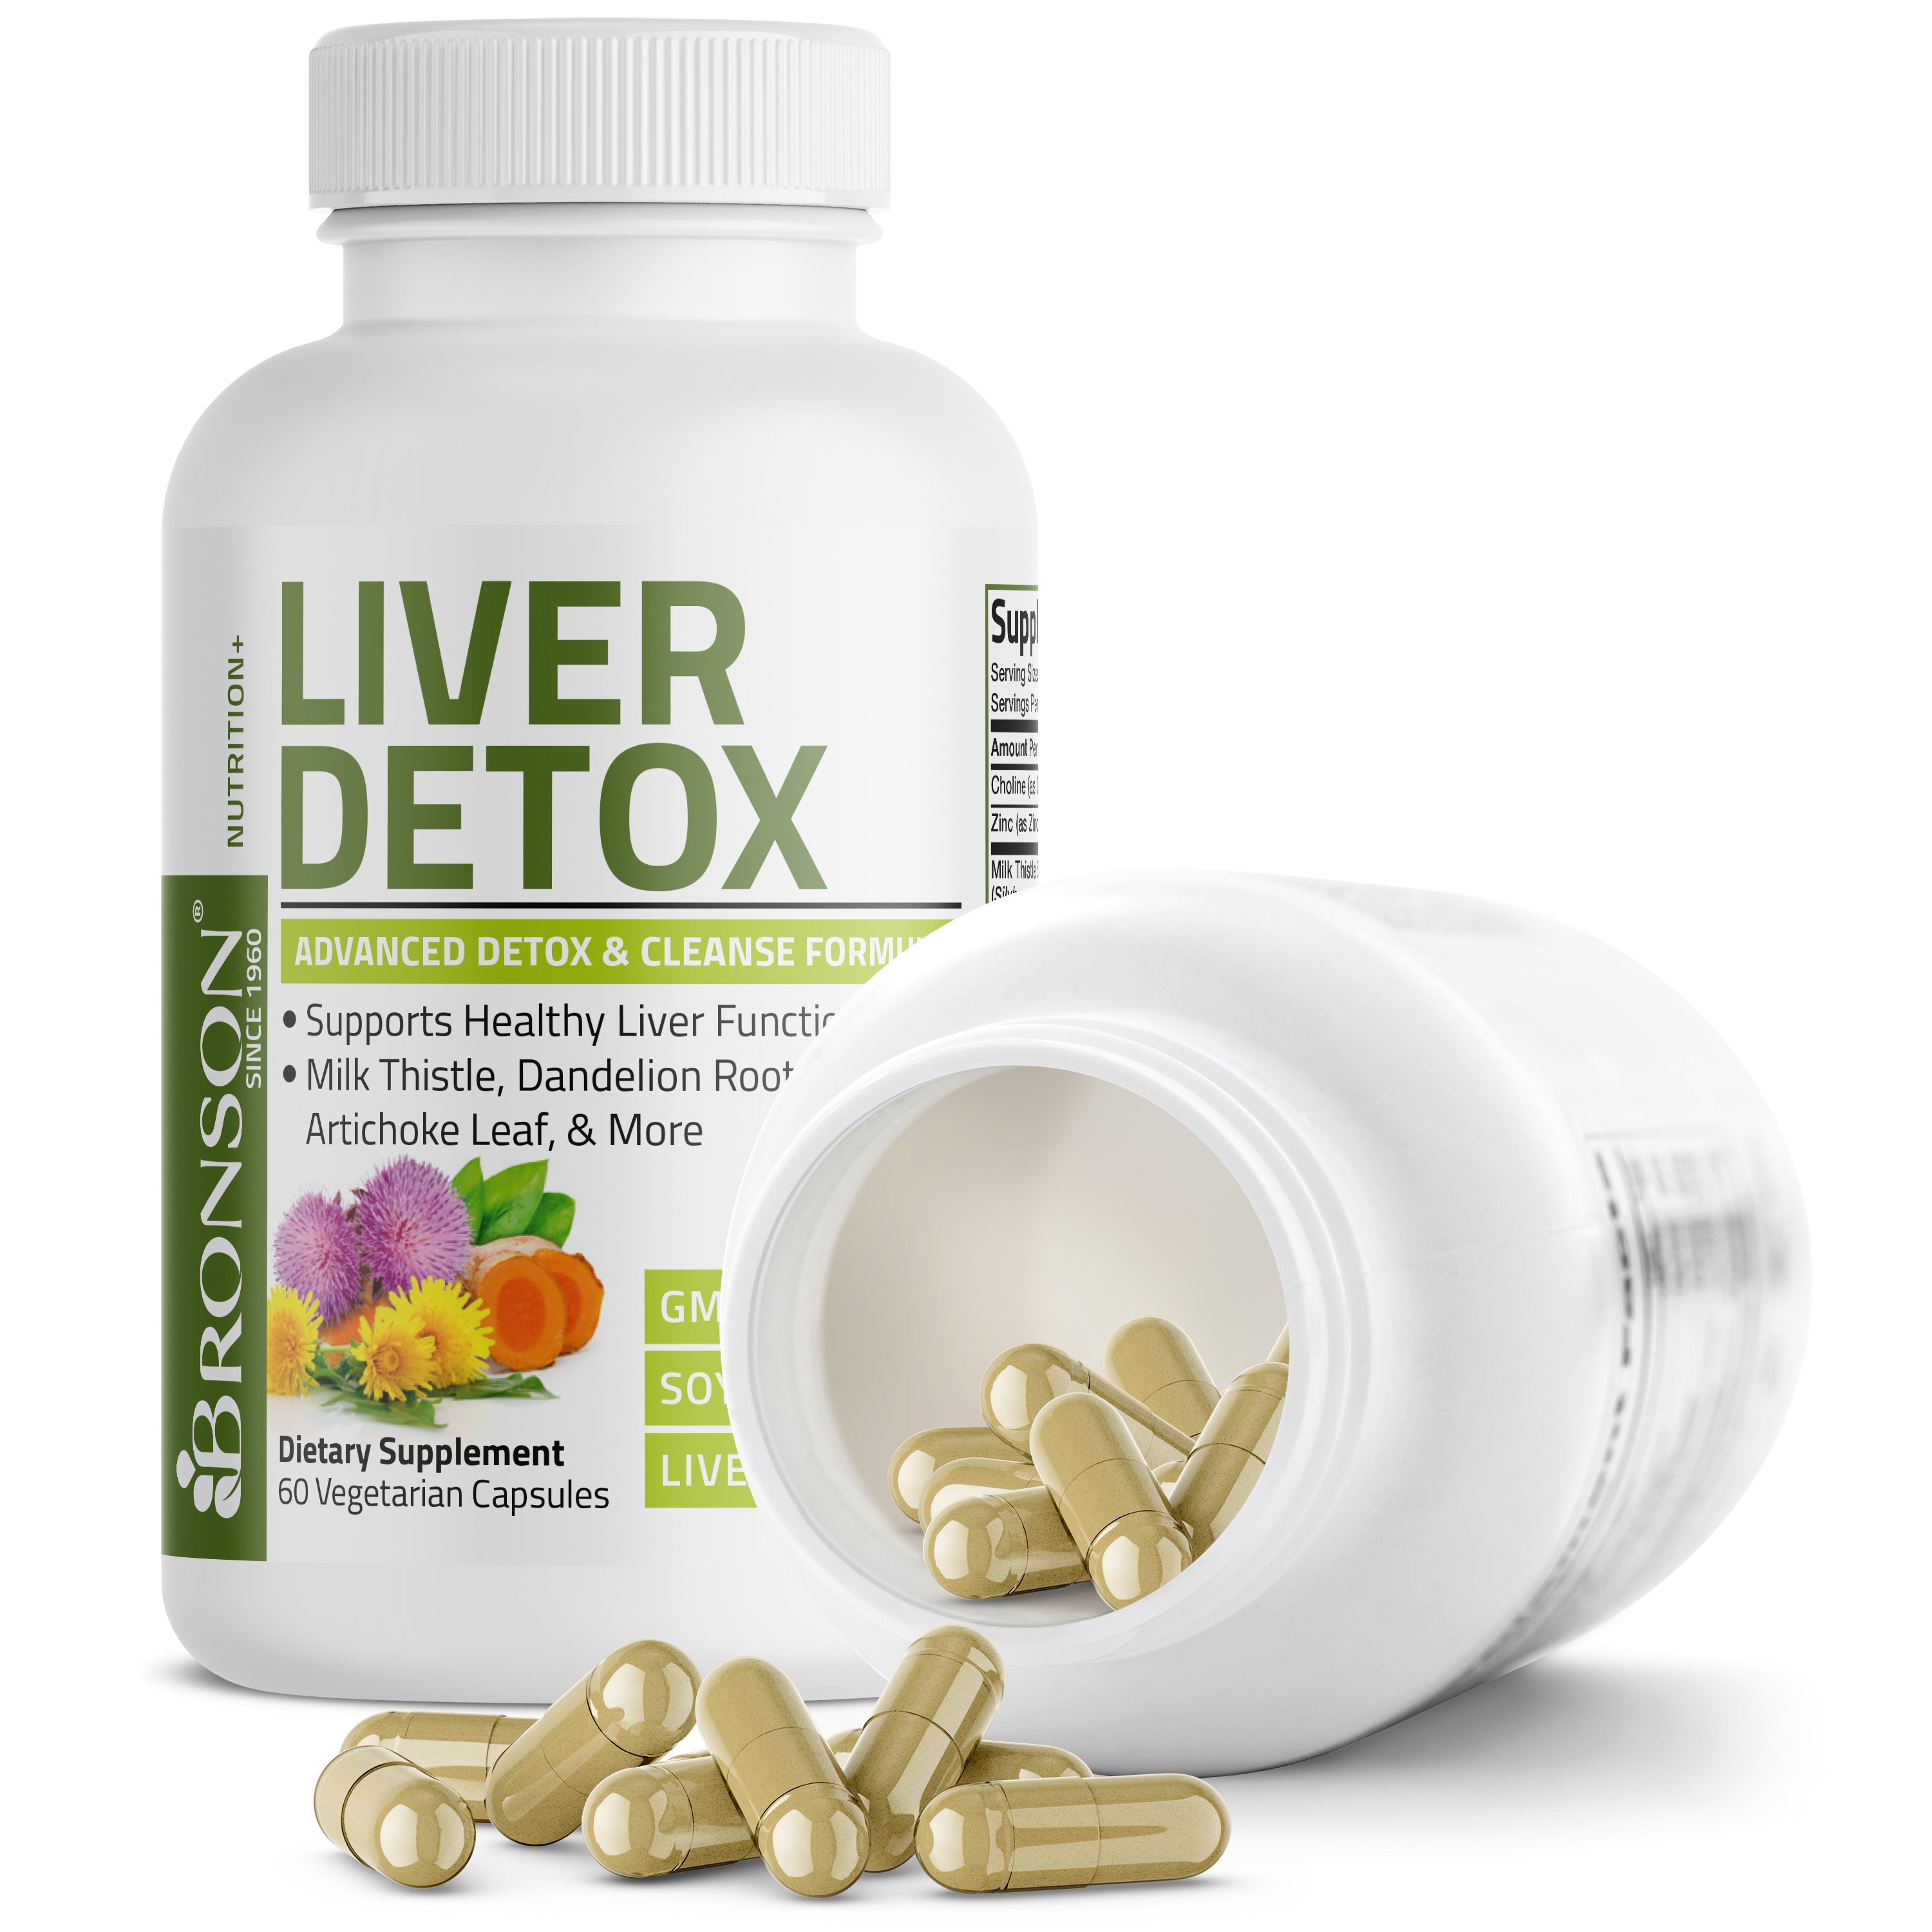 Liver Detox Advanced Detox & Cleansing Formula view 5 of 6